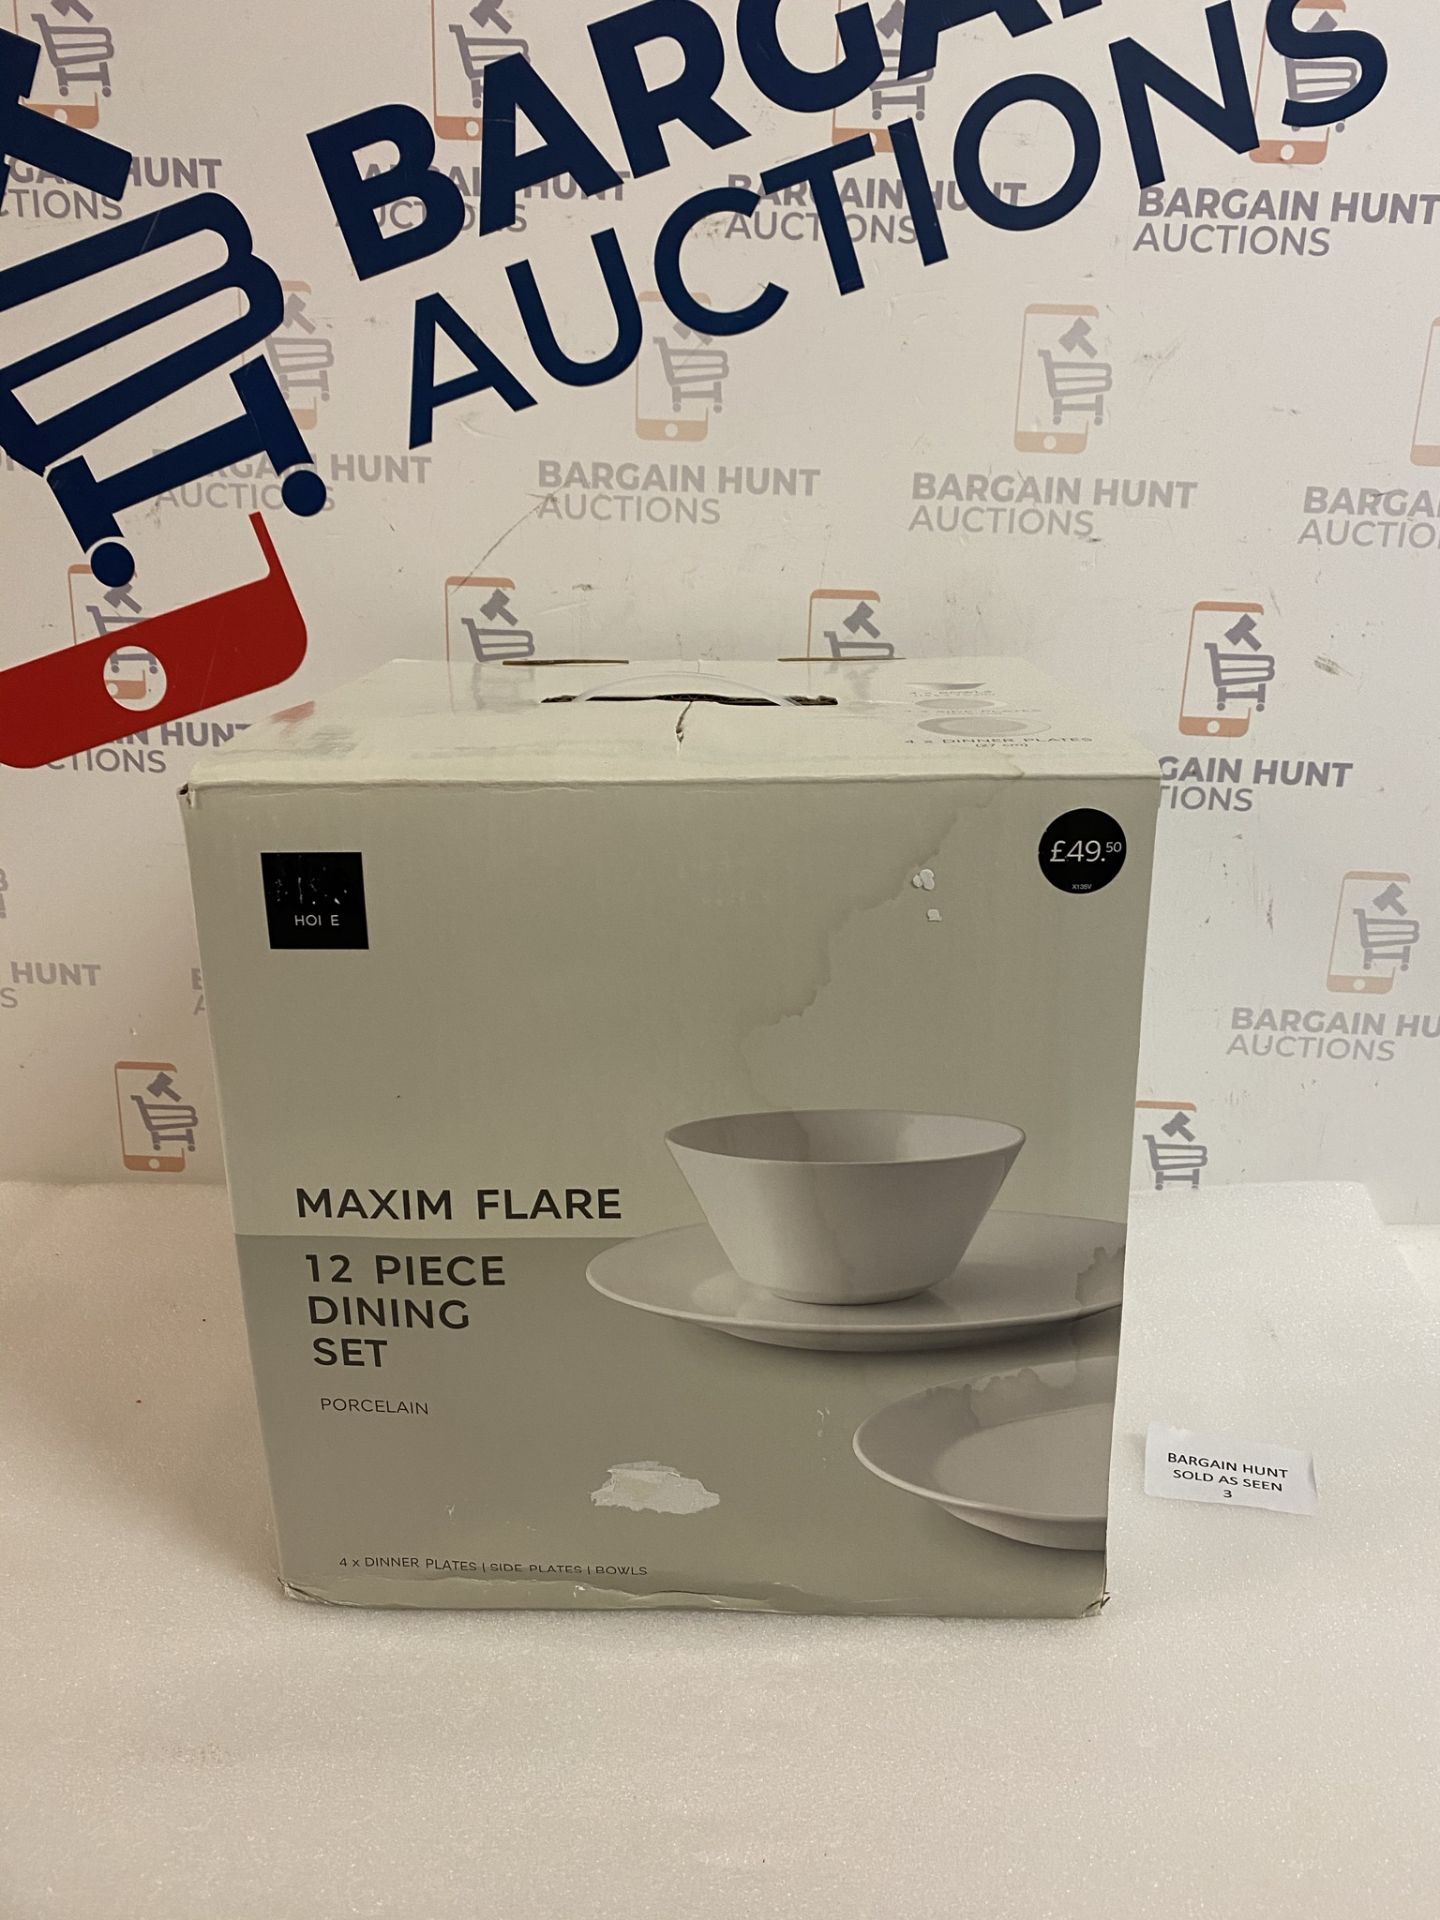 Maxim Flare Porcelain 12 Piece Dining Set RRP £49.50